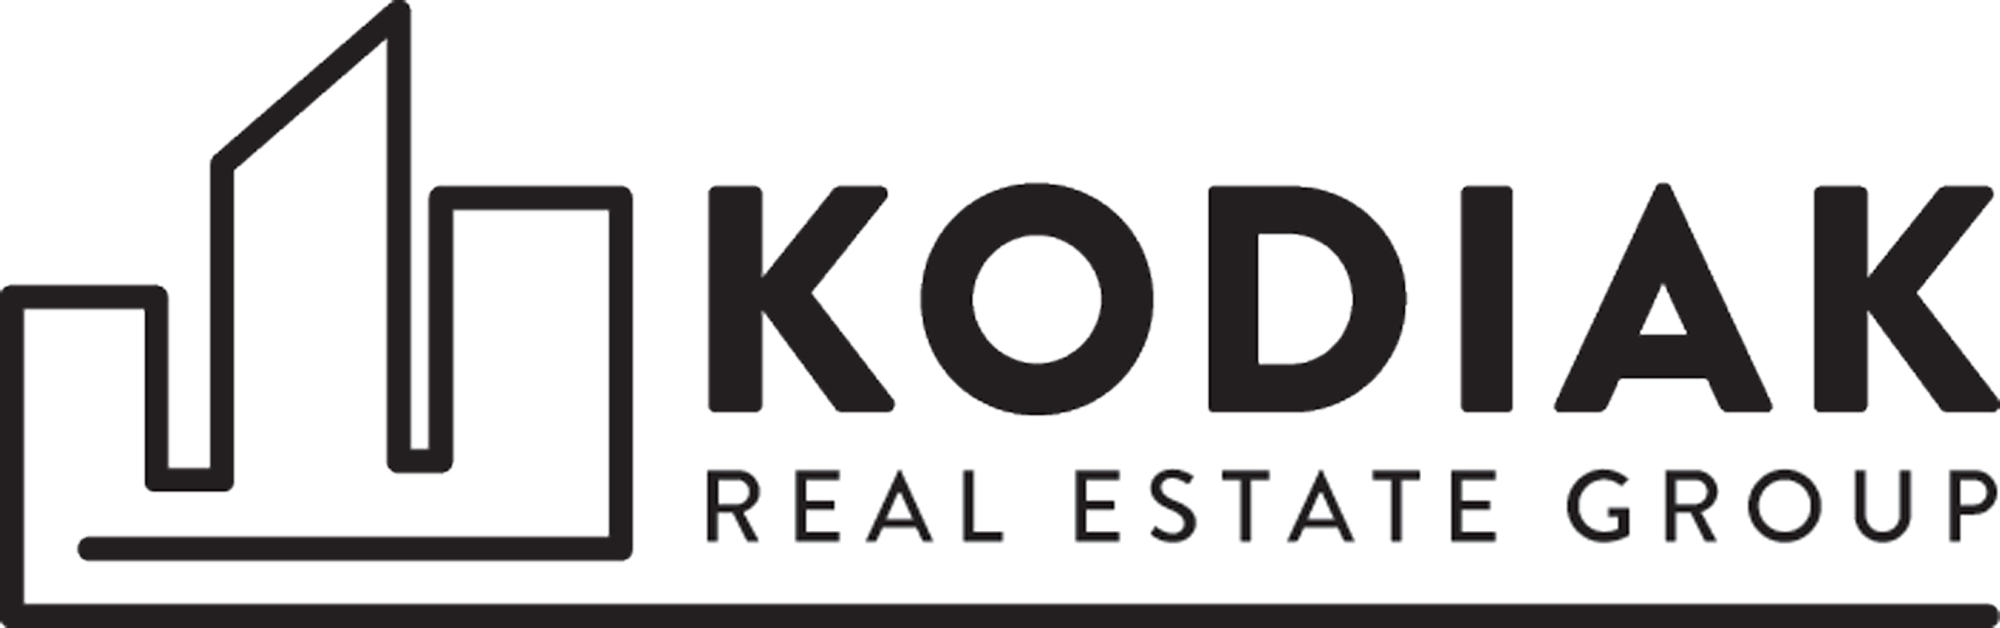 Kodiak Real Estate Group